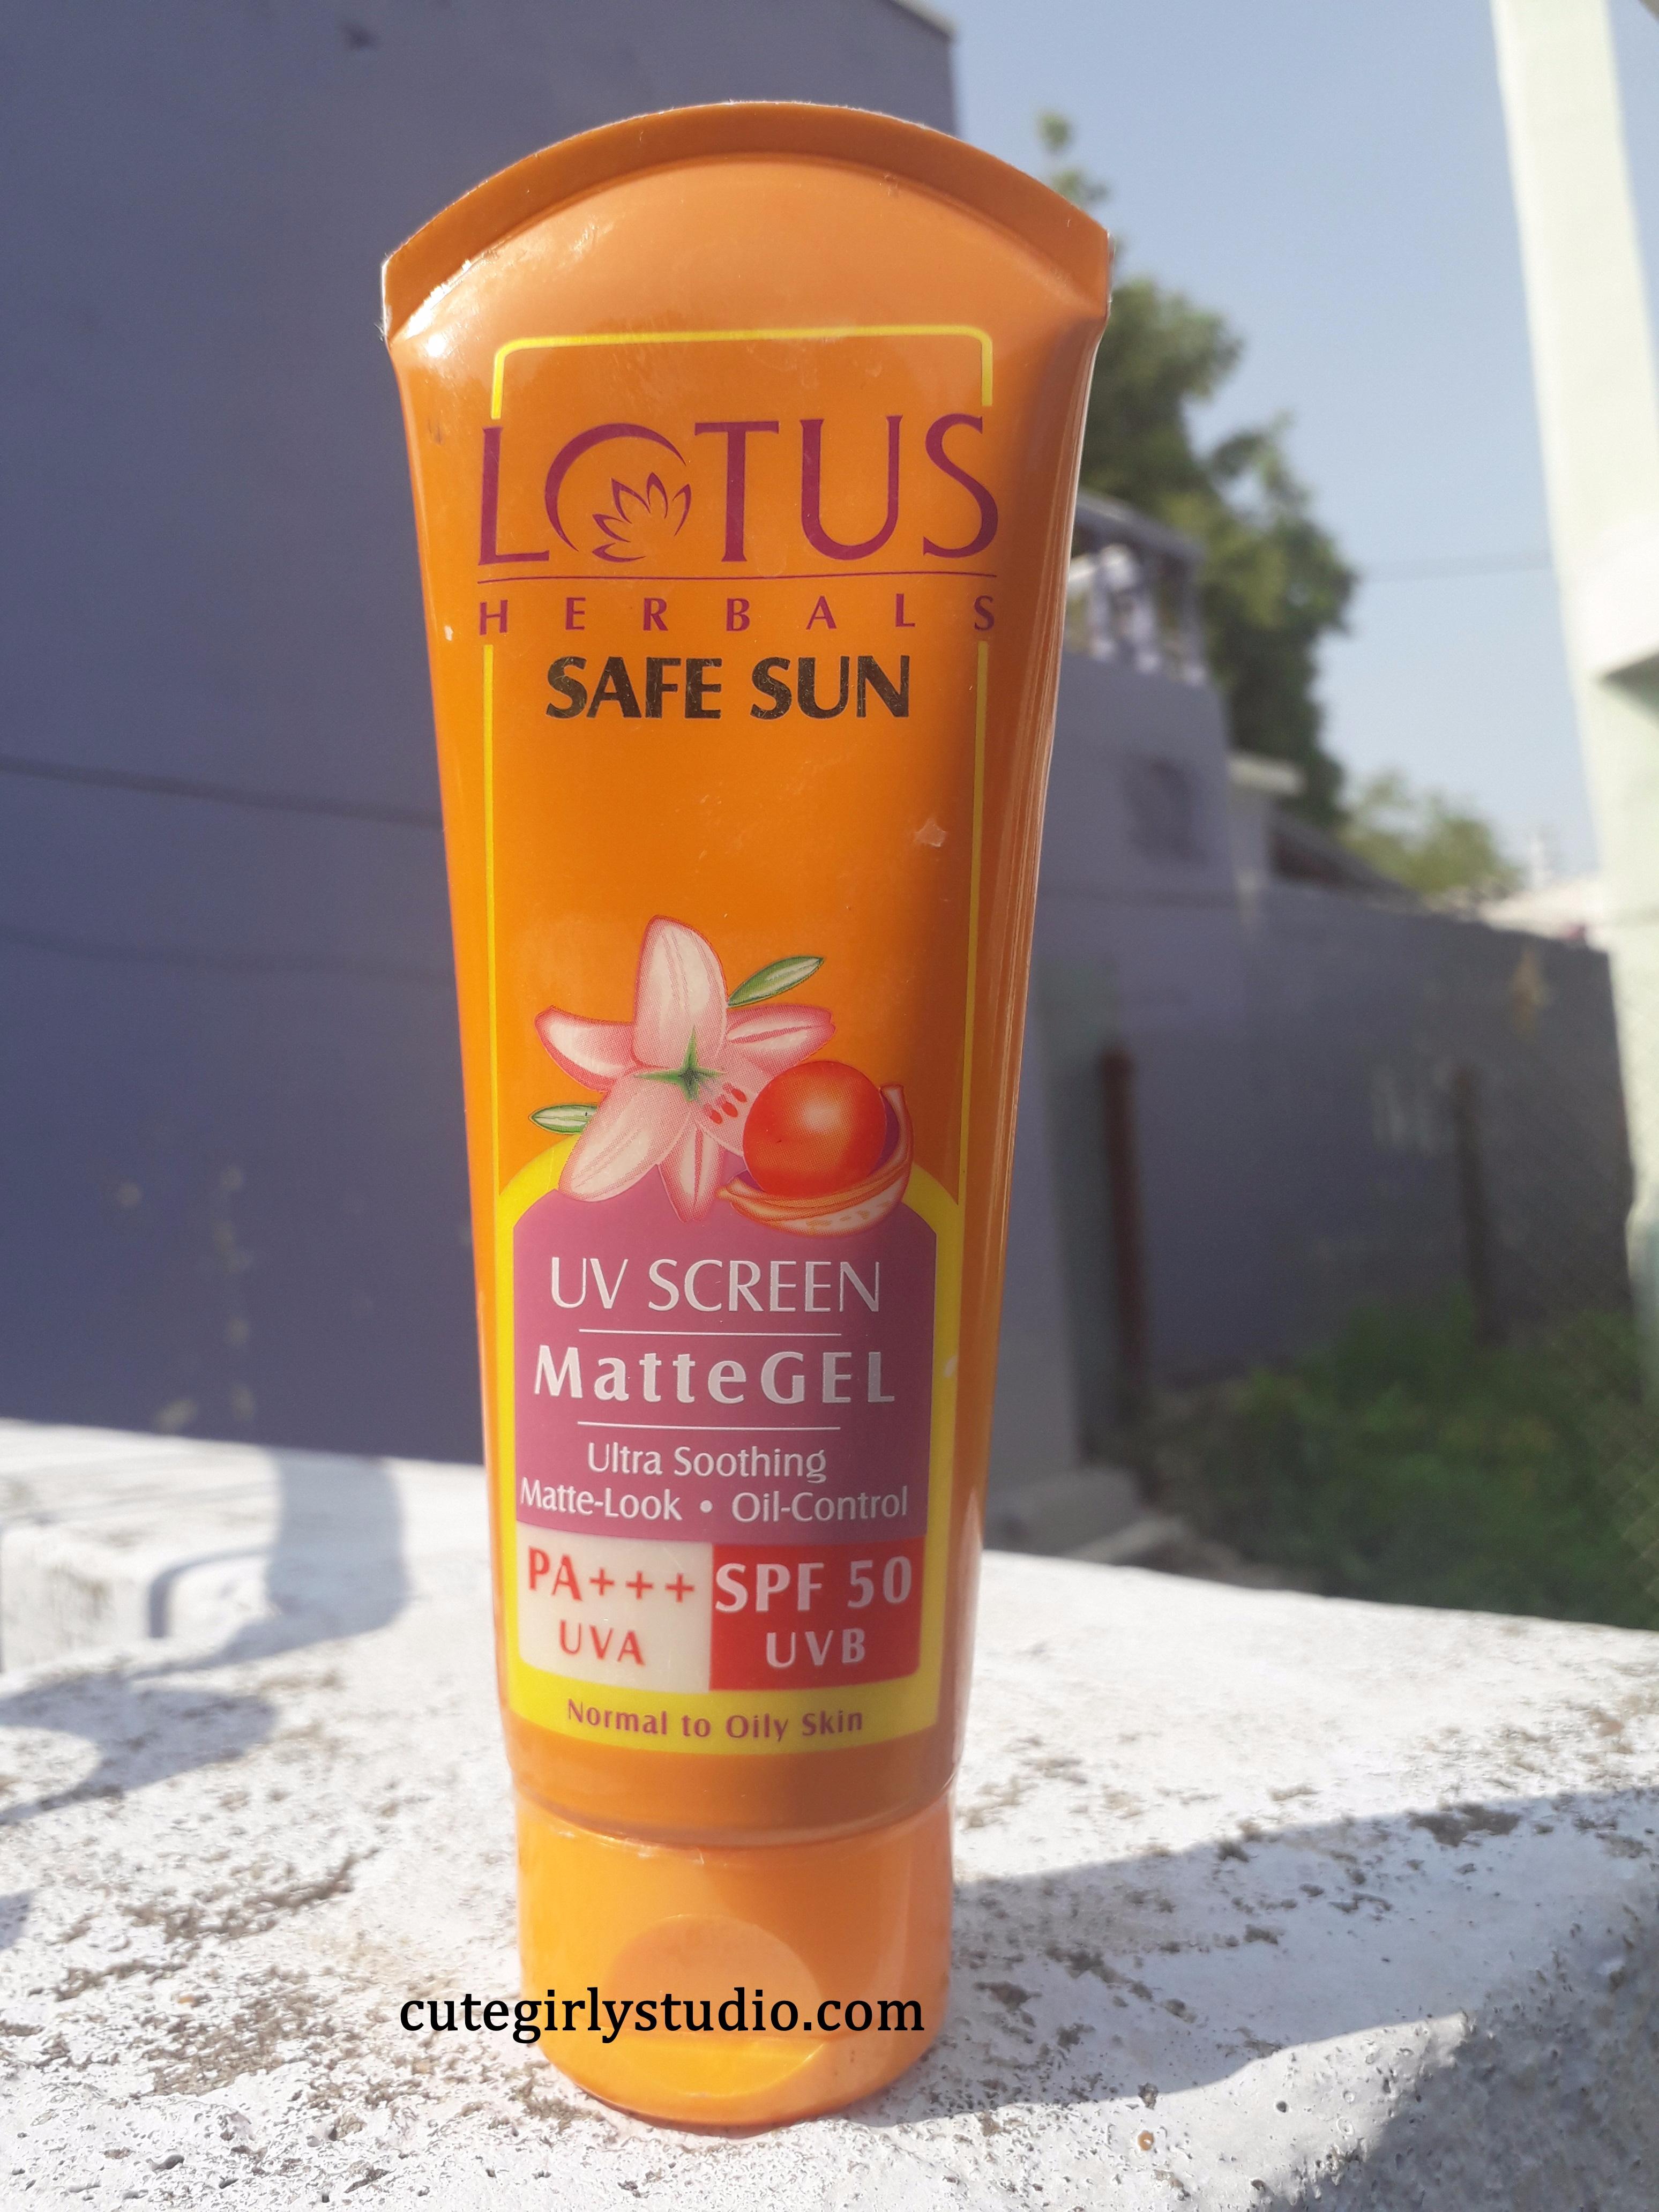 Lotus herbals safe sun uv matte gel with SPF 50